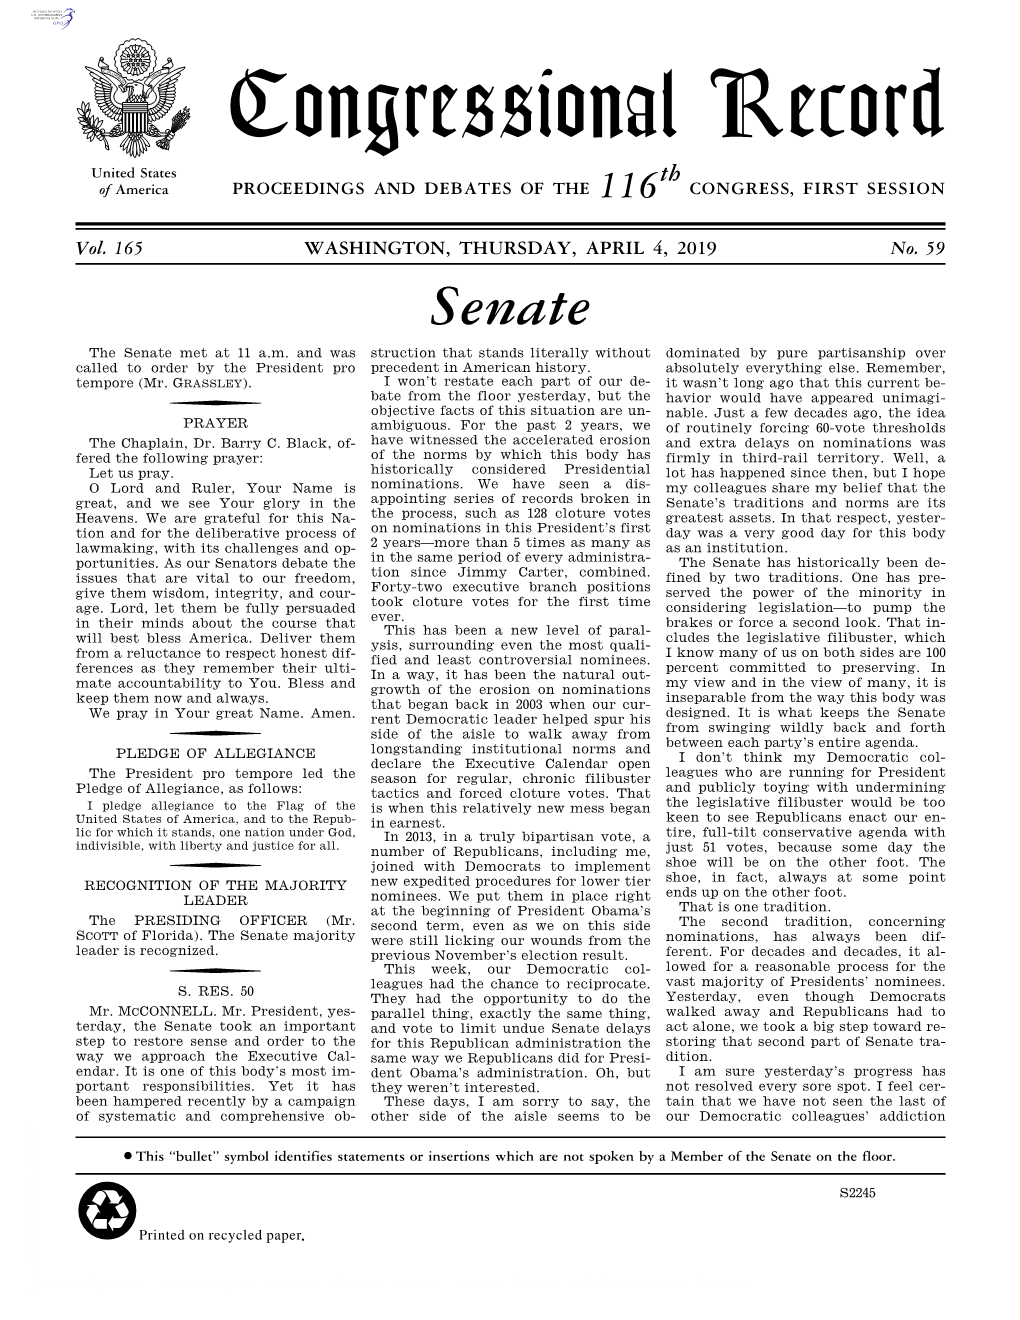 Senate Section (PDF 580KB)